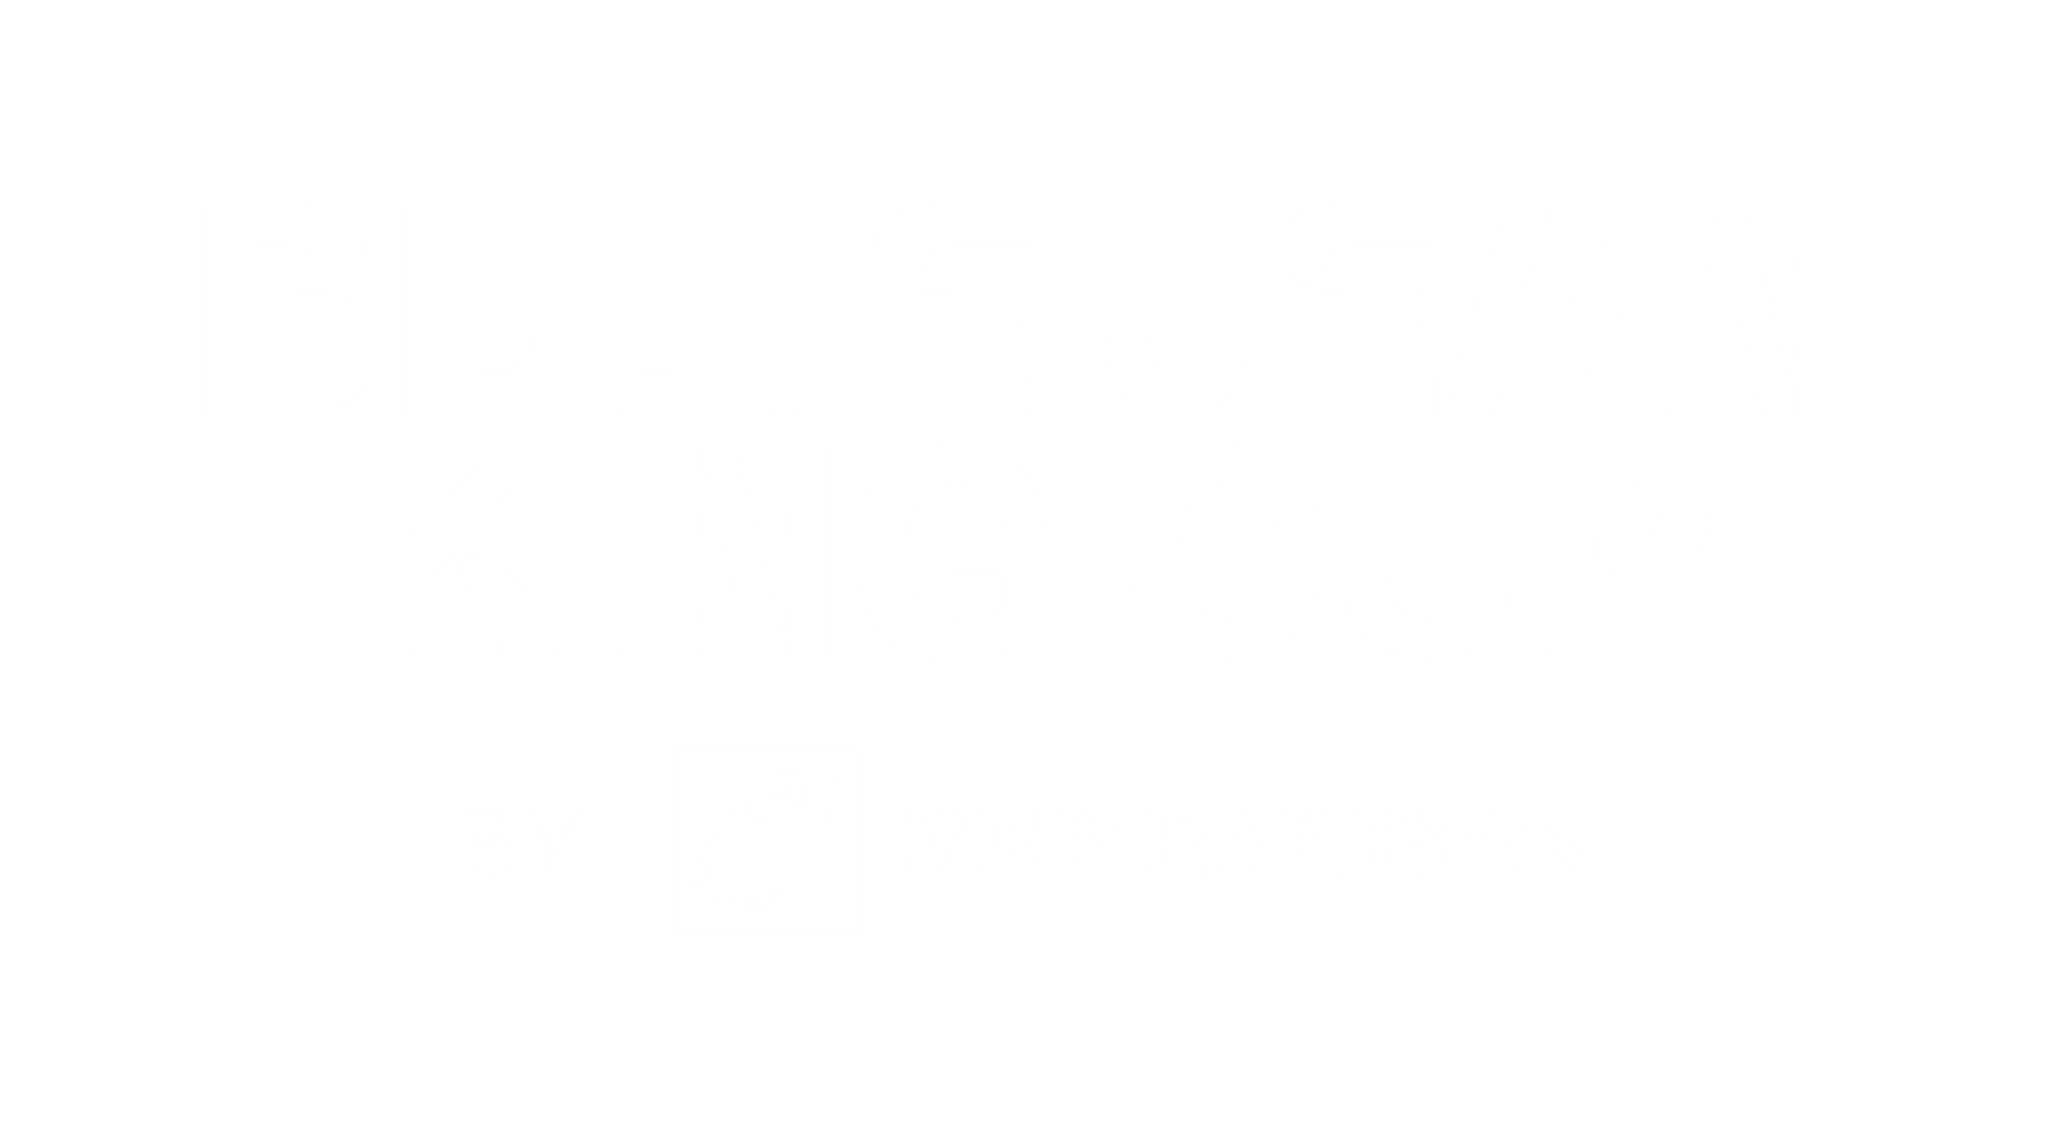 Billie Jean King Cup by BNP Paribas LTA